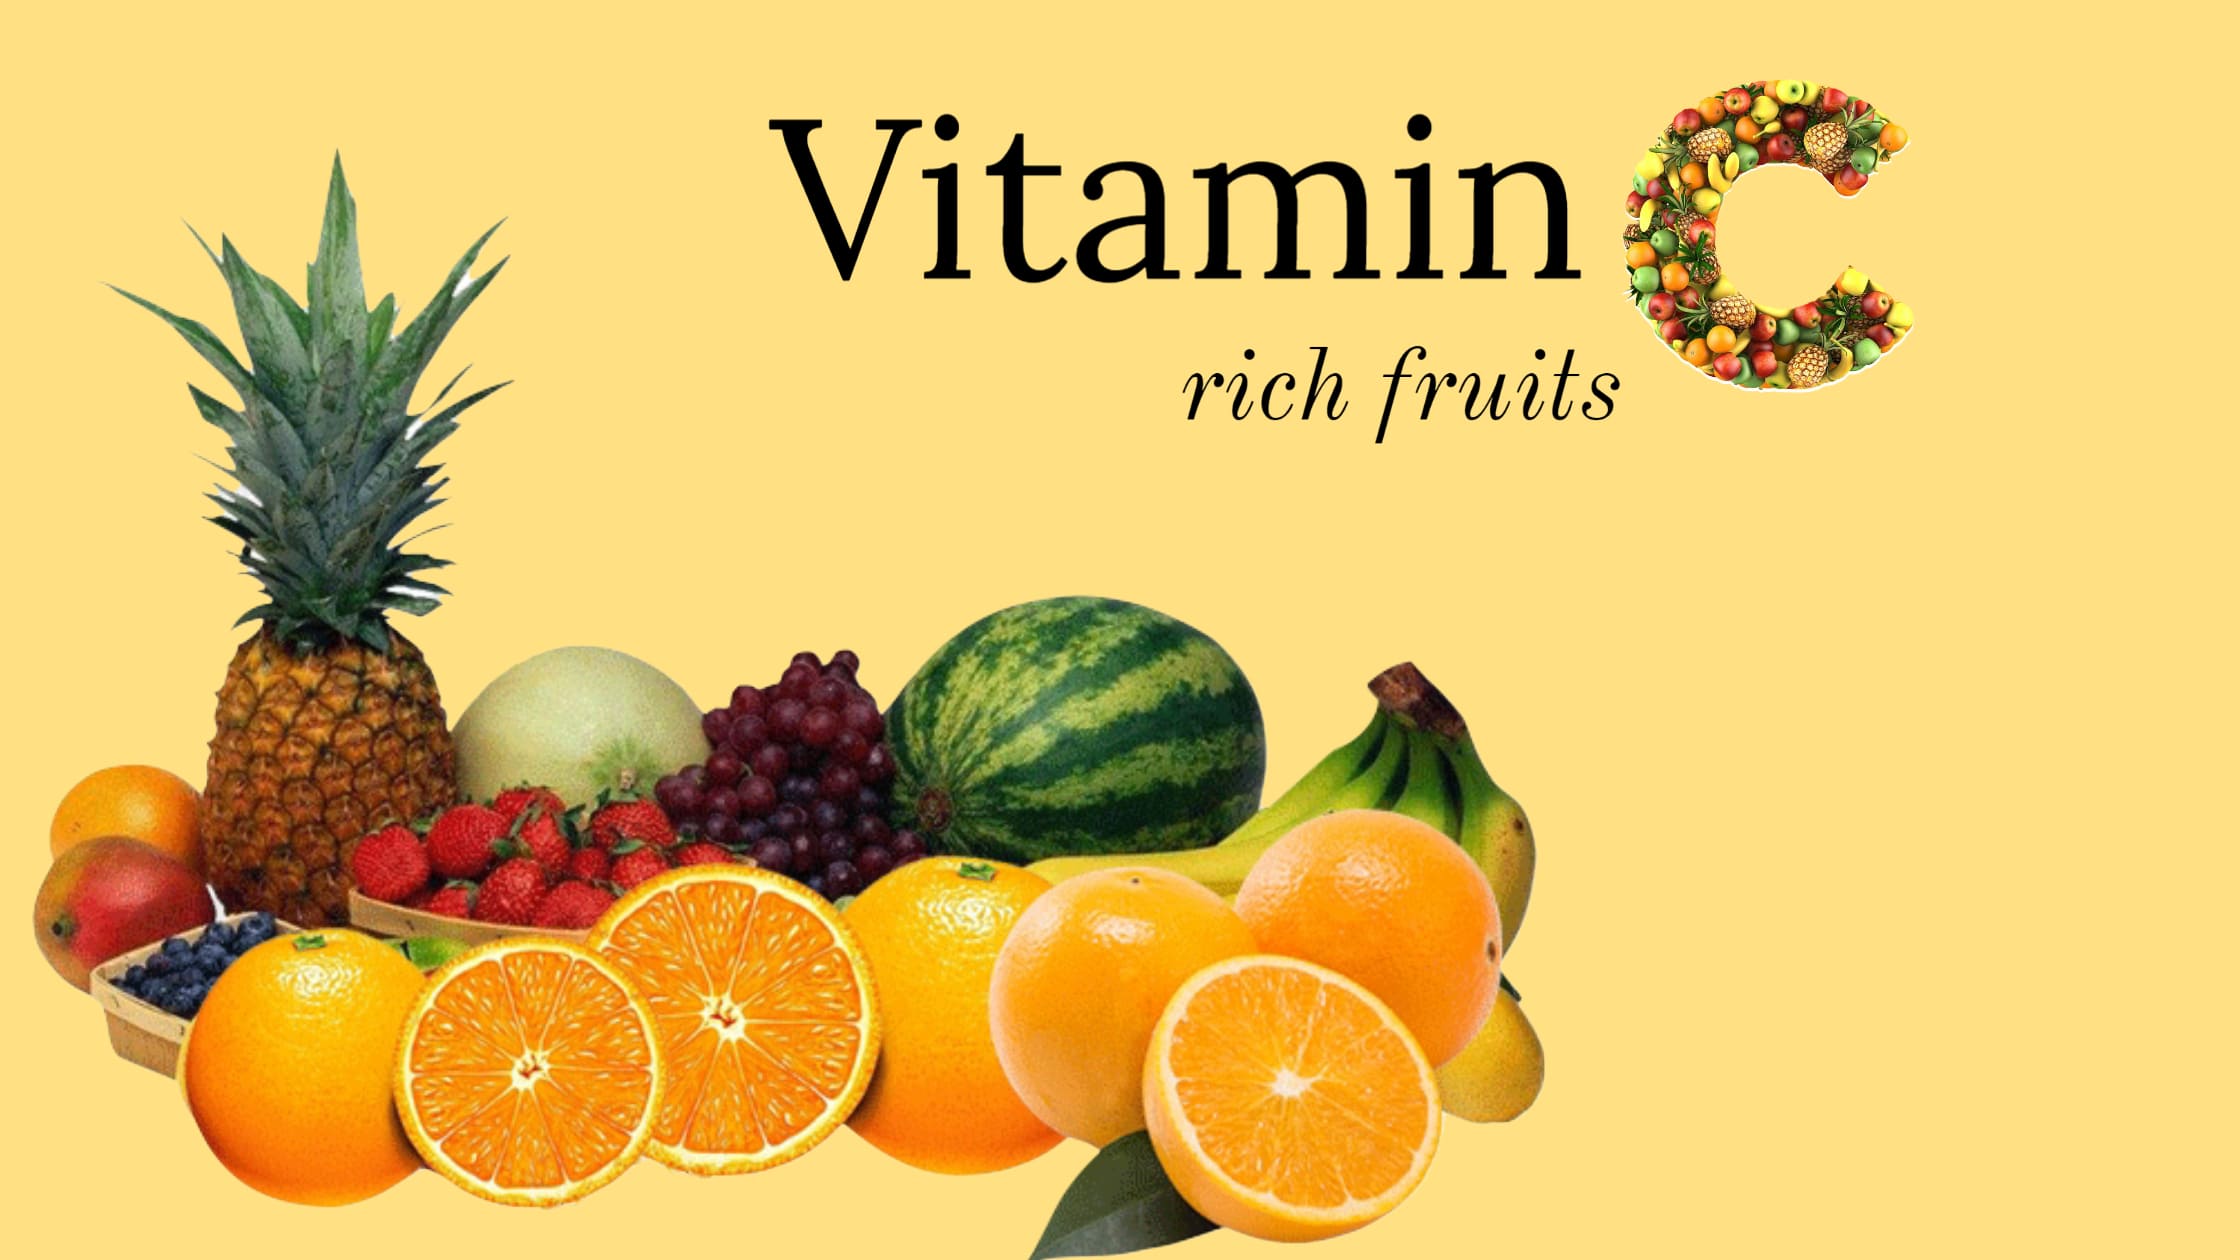 Foods High In Vitamin C